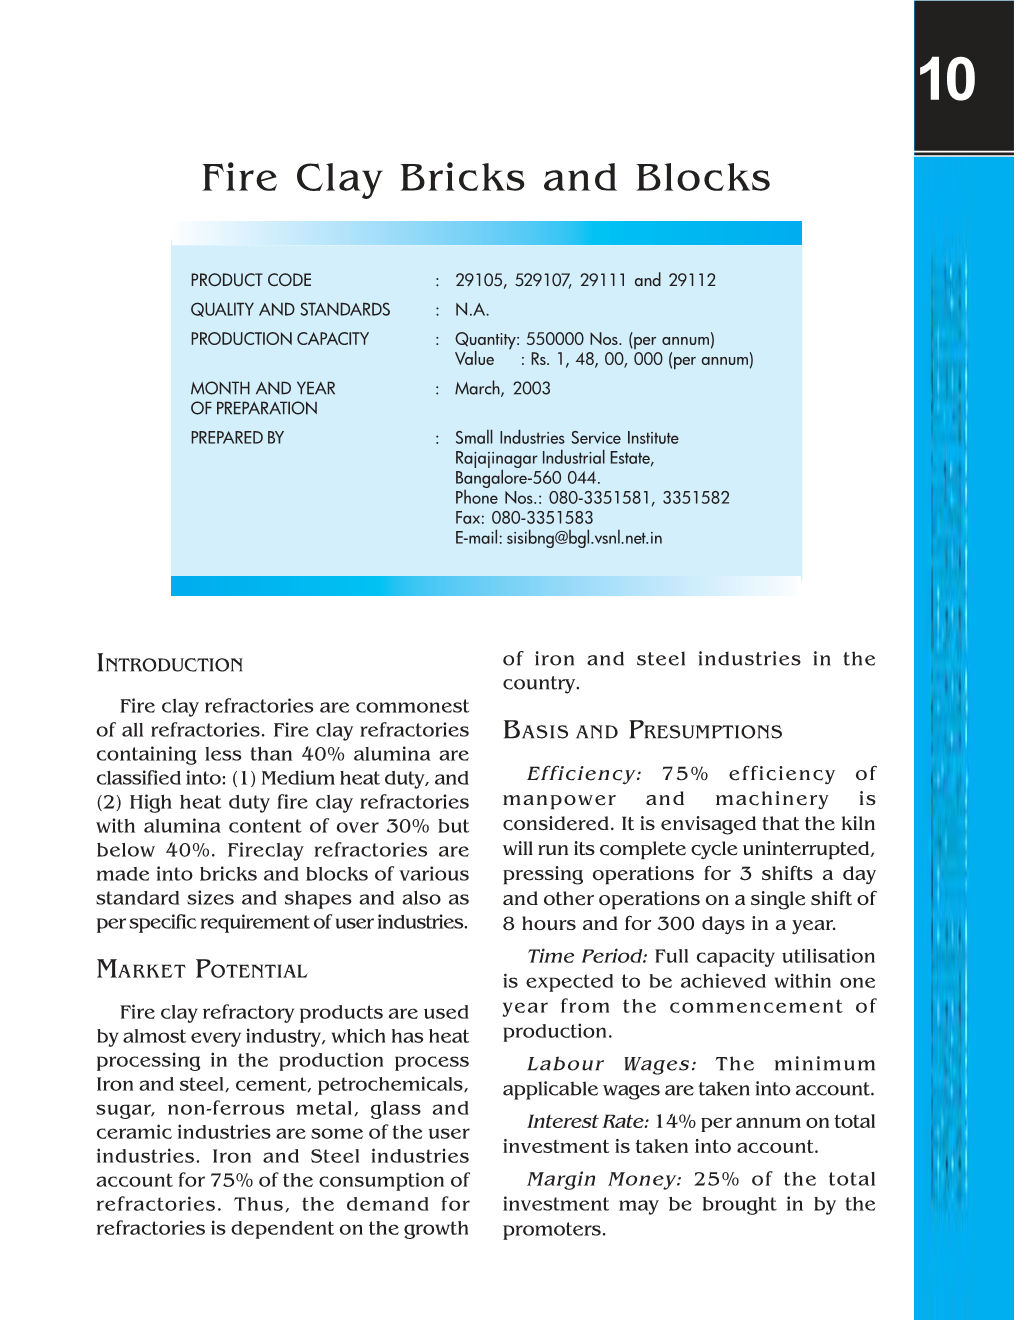 Fire Clay Bricks and Blocks